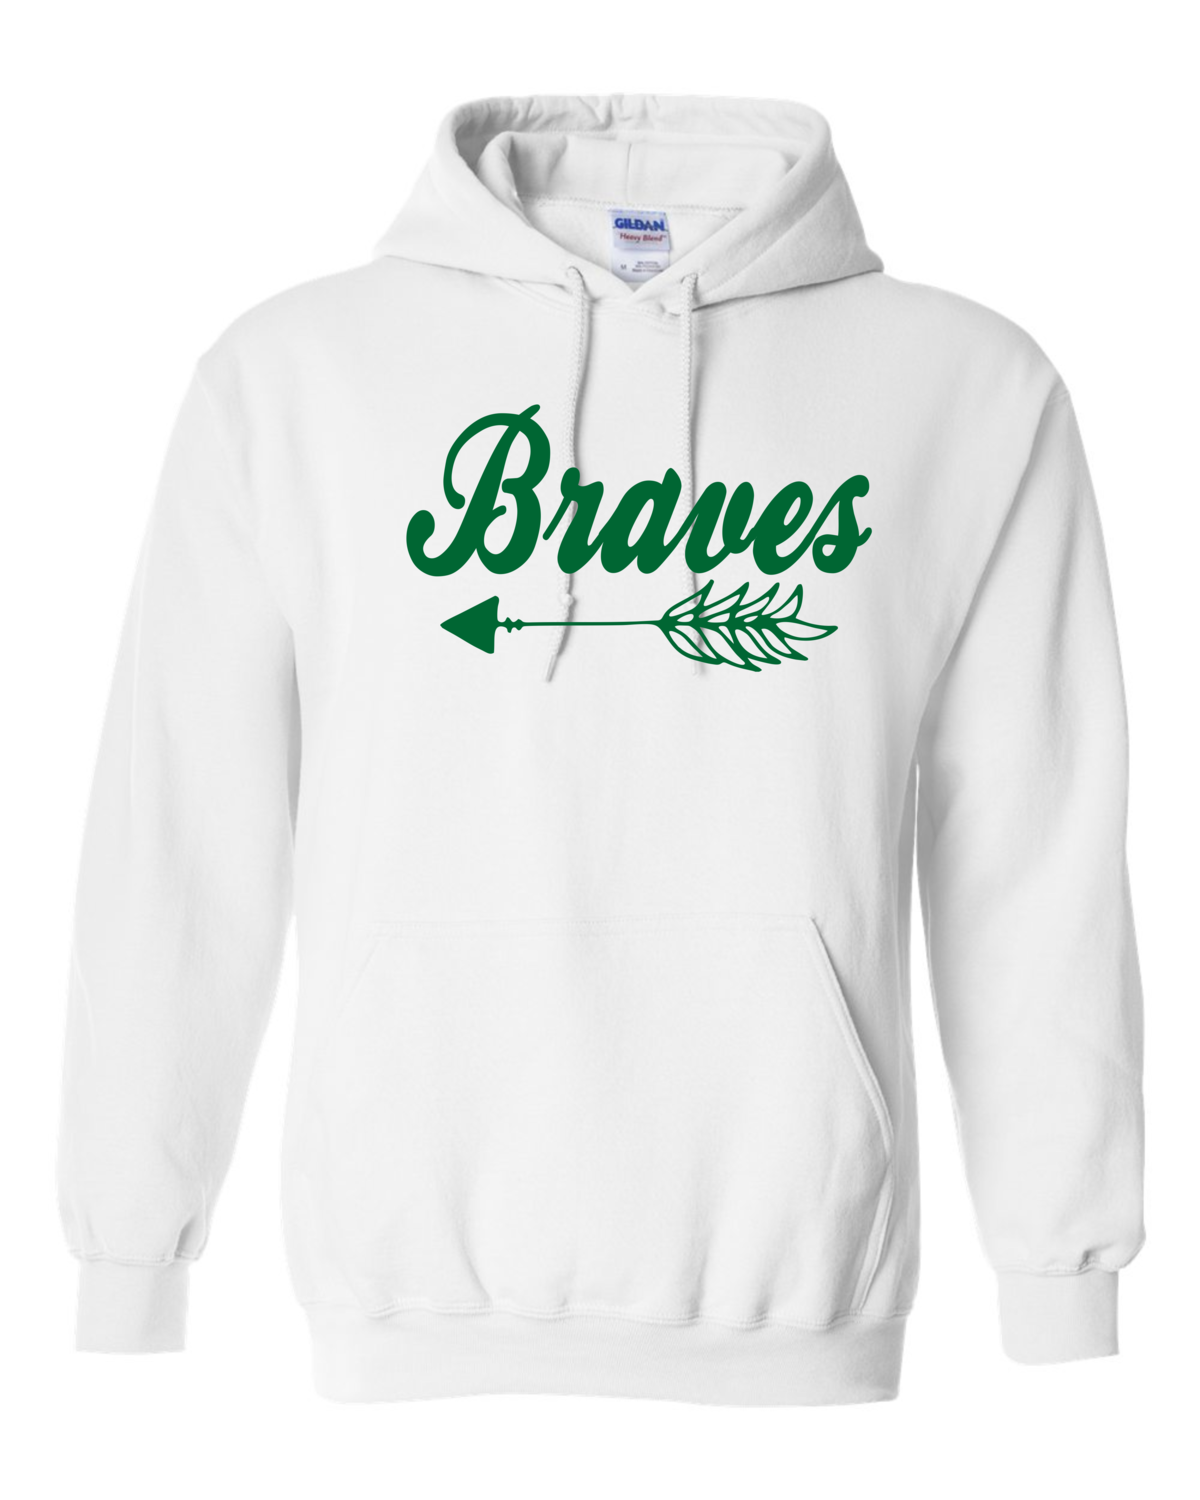 Braves Hooded Sweatshirt, 4 colors available, GLITTER LOGO